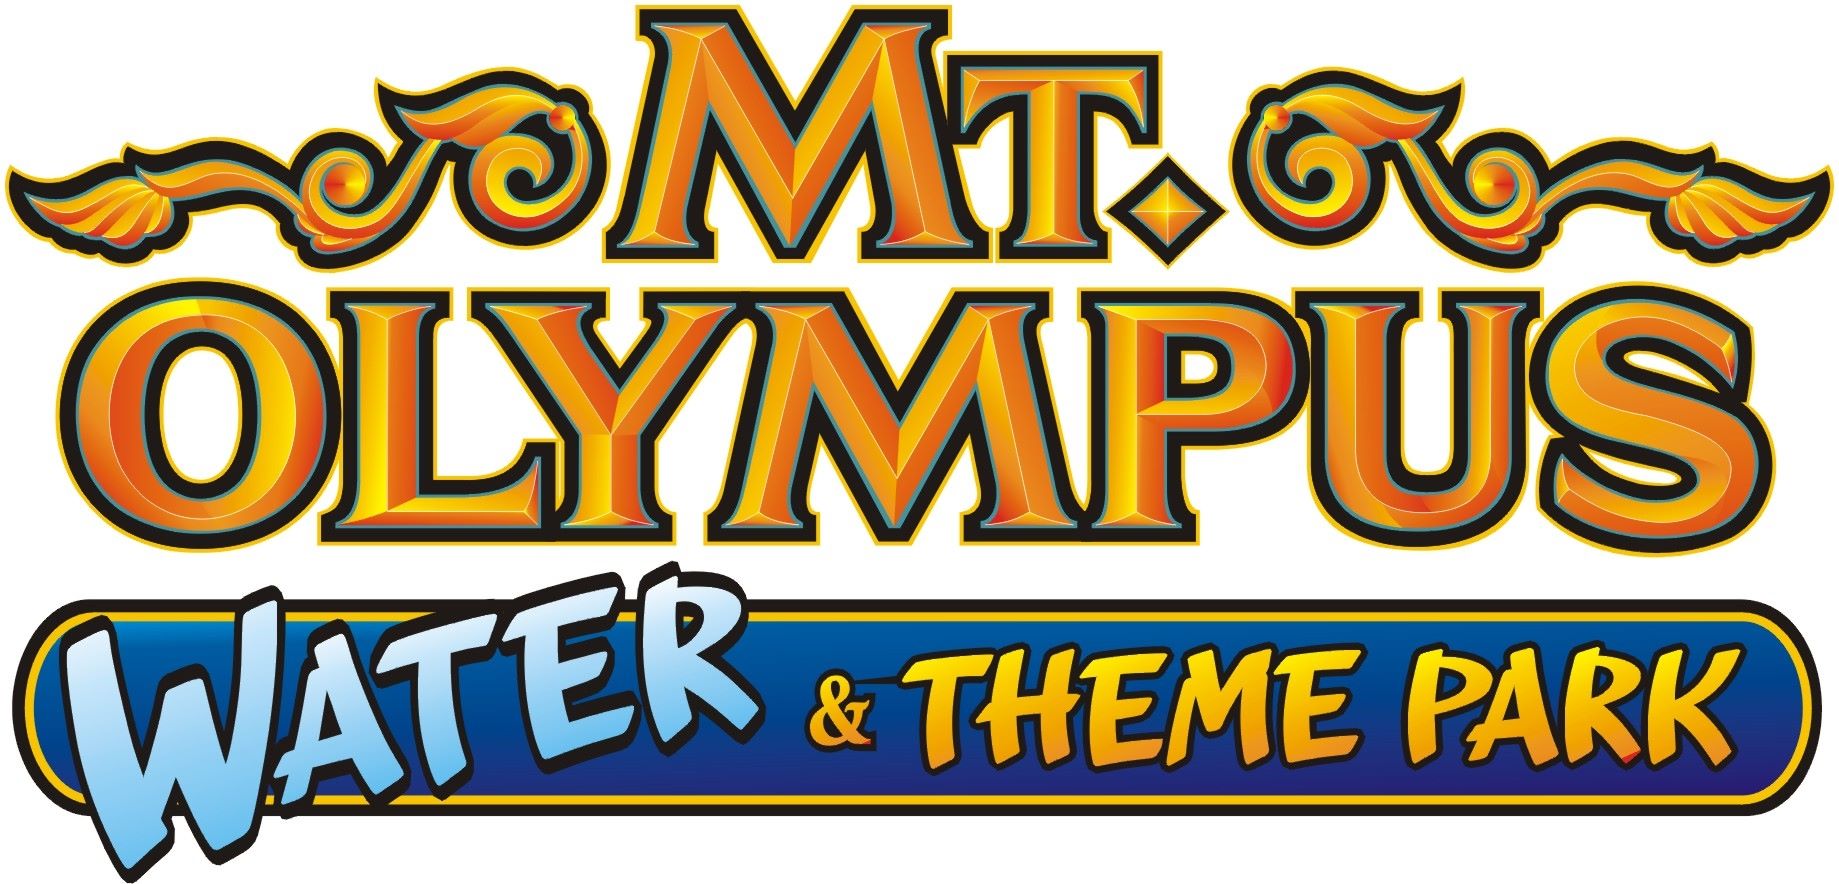 Mt. Olympus water park logo